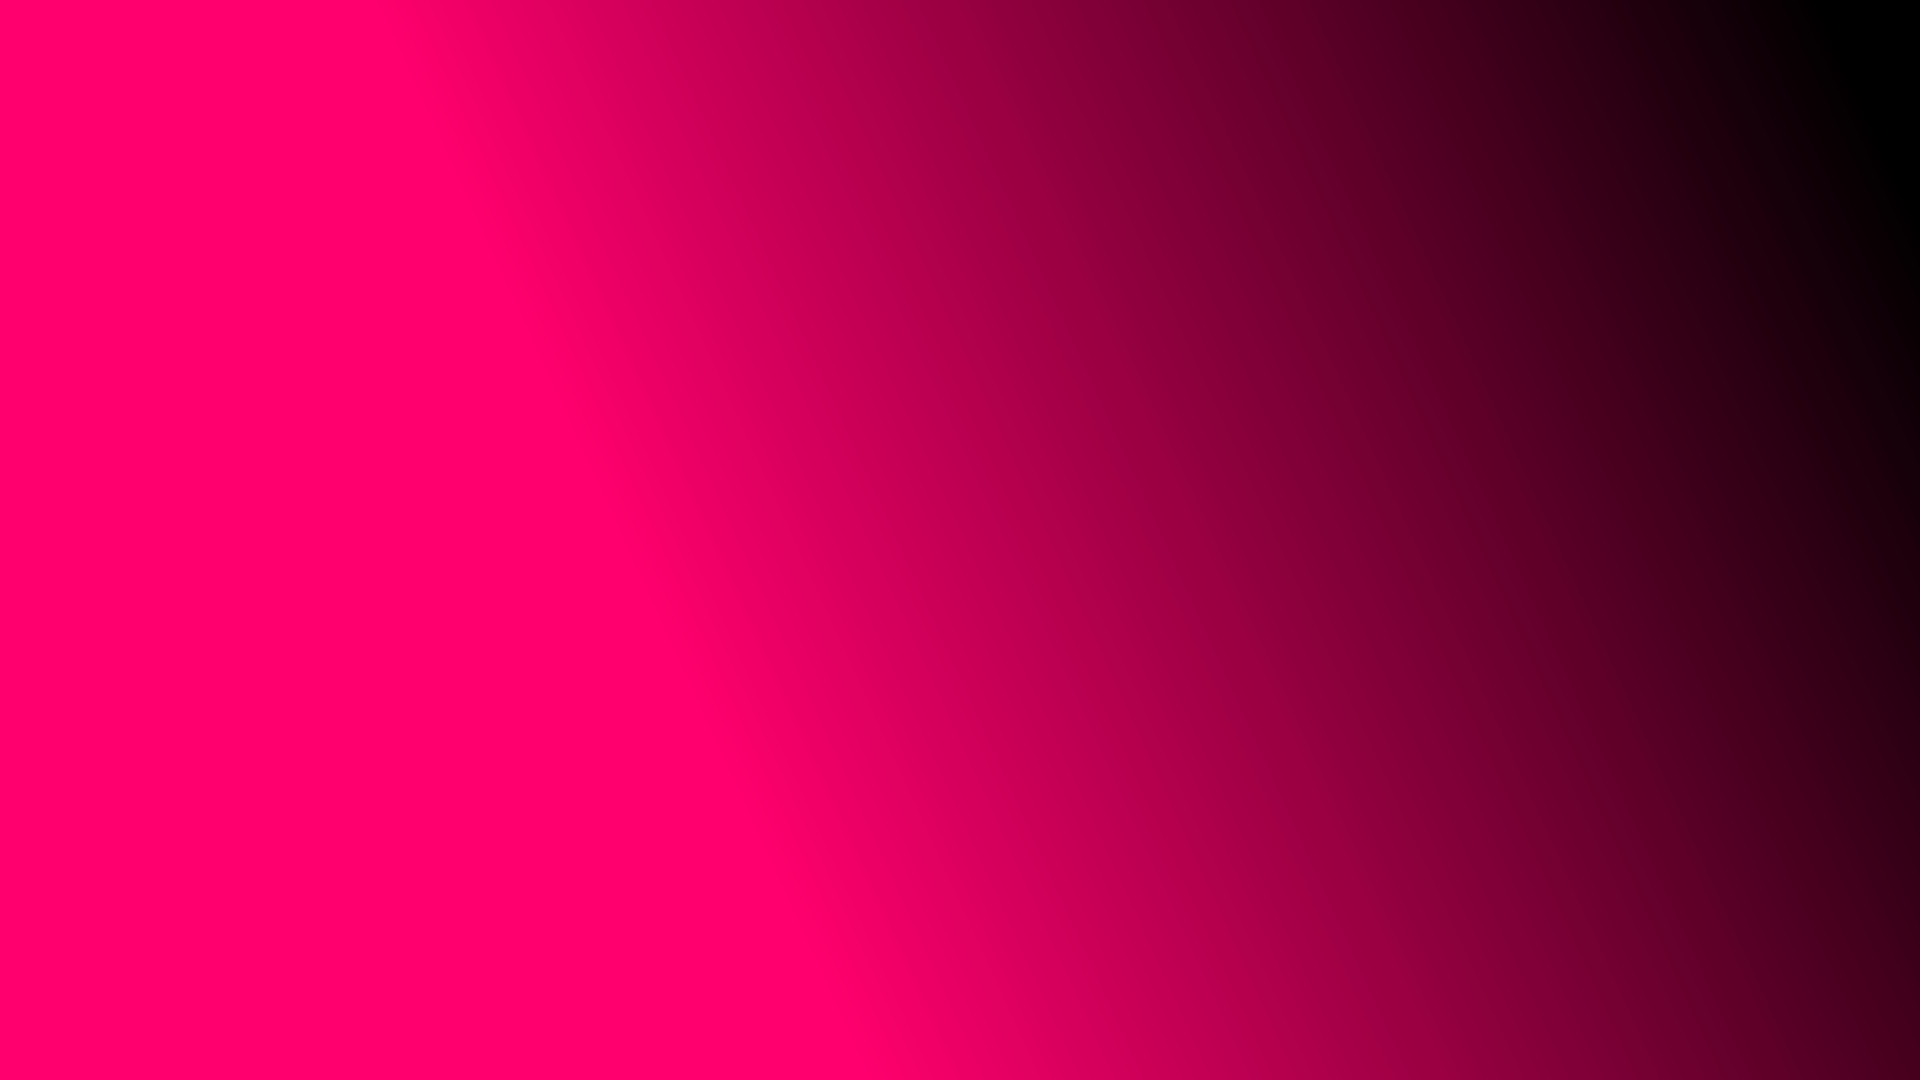 Pink And Black Backgrounds HD - PixelsTalk.Net